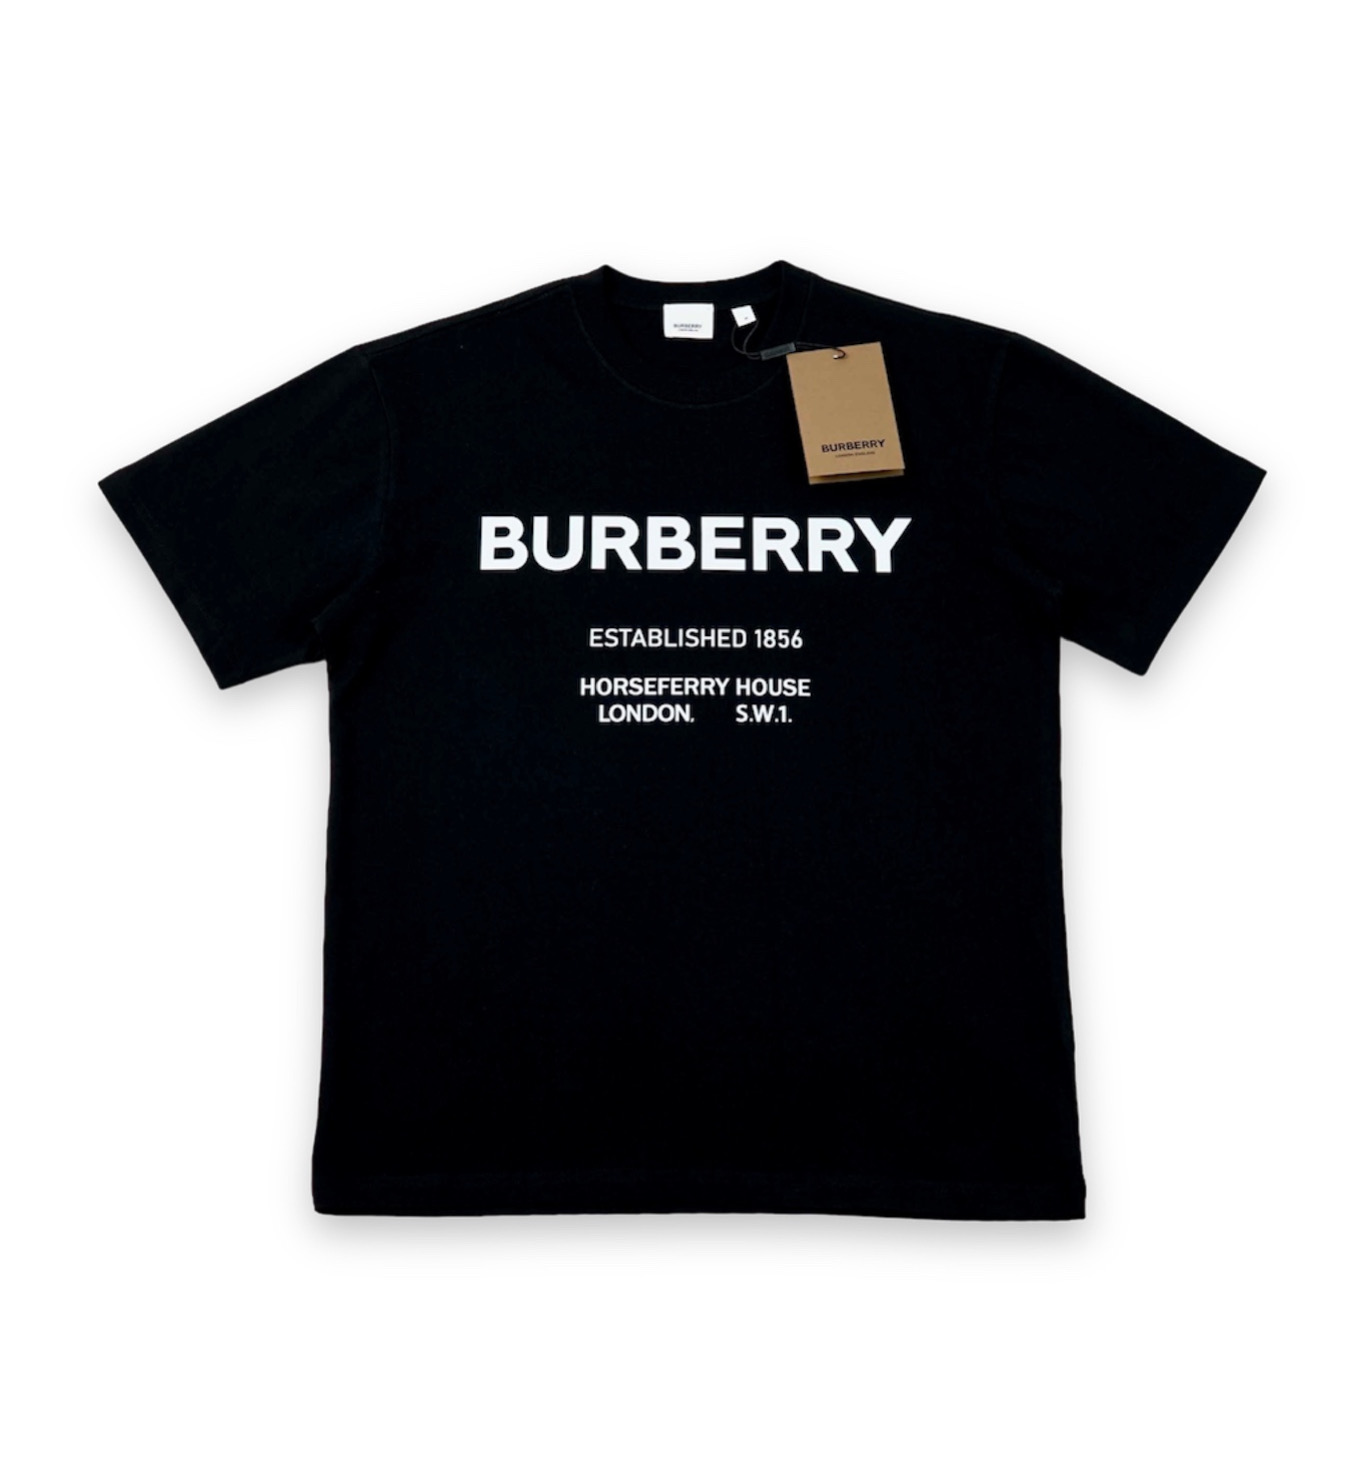 Burberry Established 1856 T-Shirt - Black | Hangau.Vn